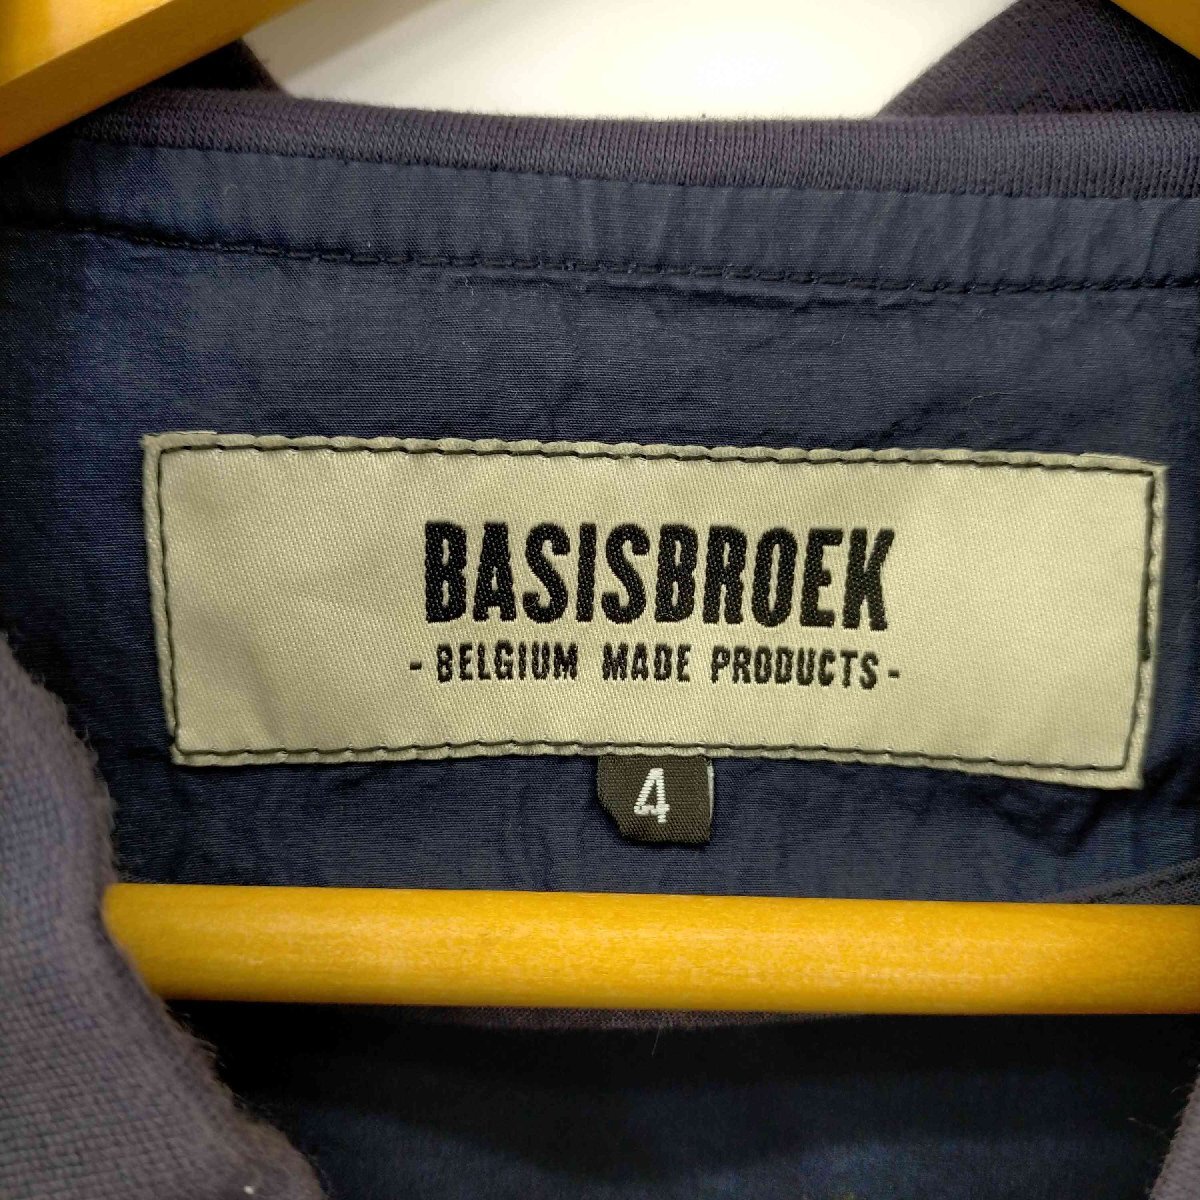 BASISBROEK(バージズブルック) シルク混 ジップアップブルゾン ダービージャケット メンズ JP 中古 古着 0624_画像6